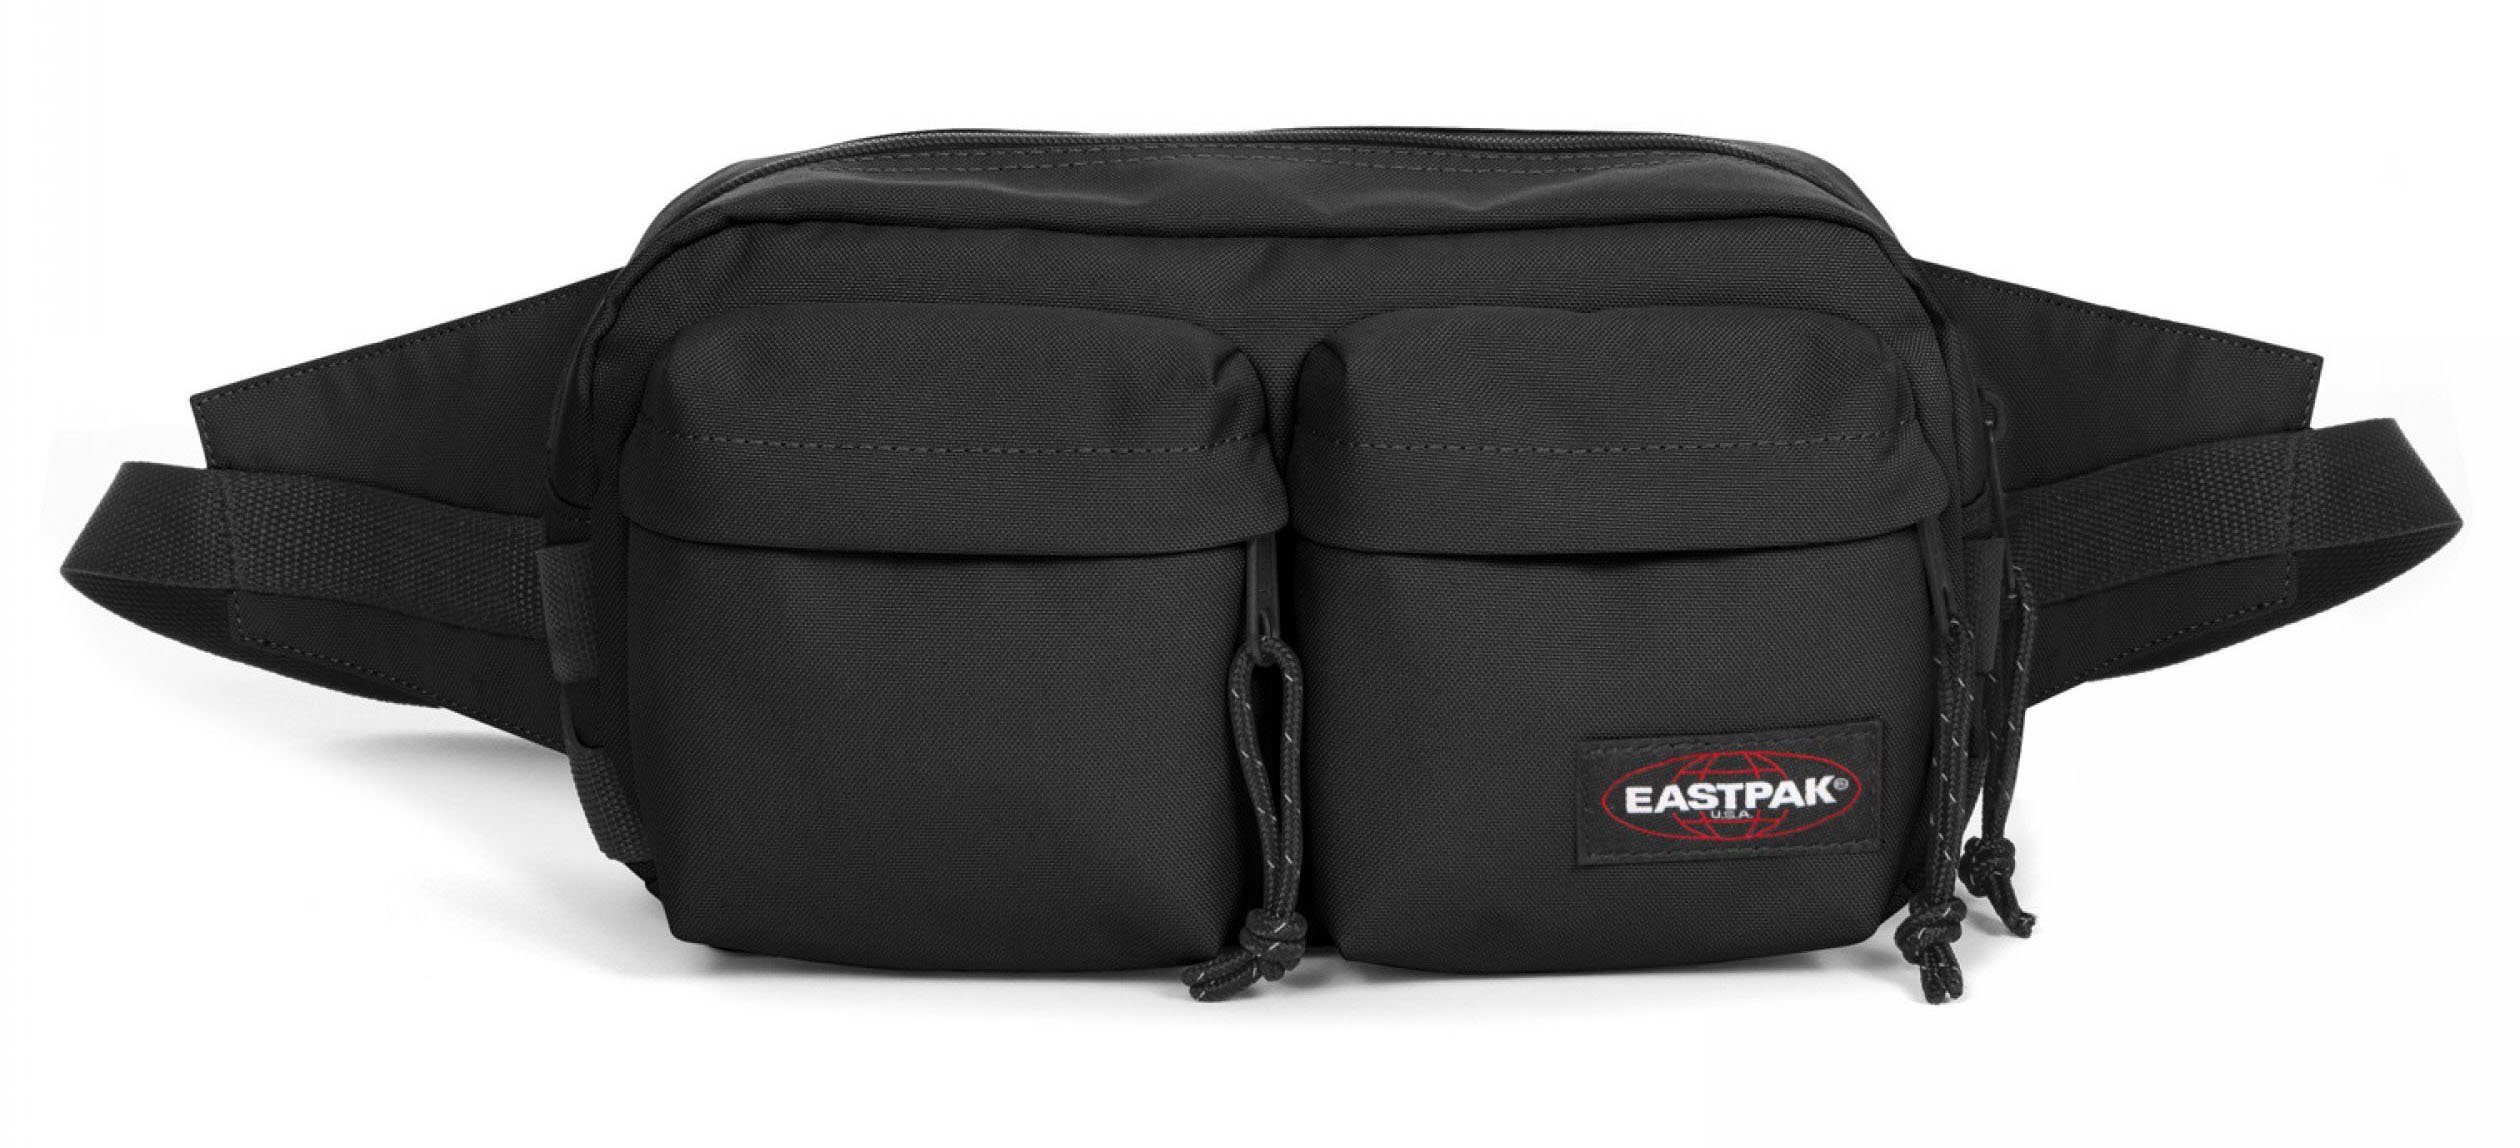 Eastpak Mini Bag »BUMBAG DOUBLE« online kaufen | OTTO